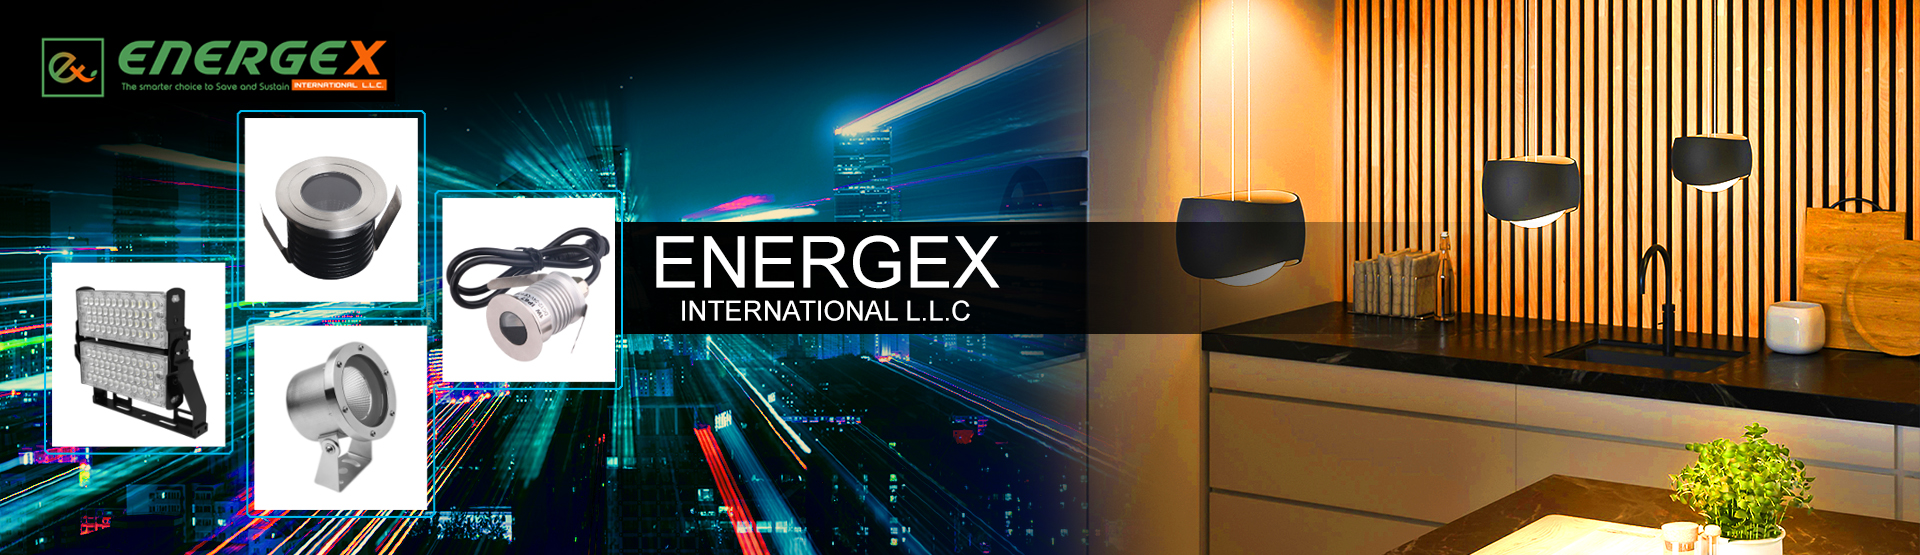 ENERGEX INTERNATIONAL L.L.C